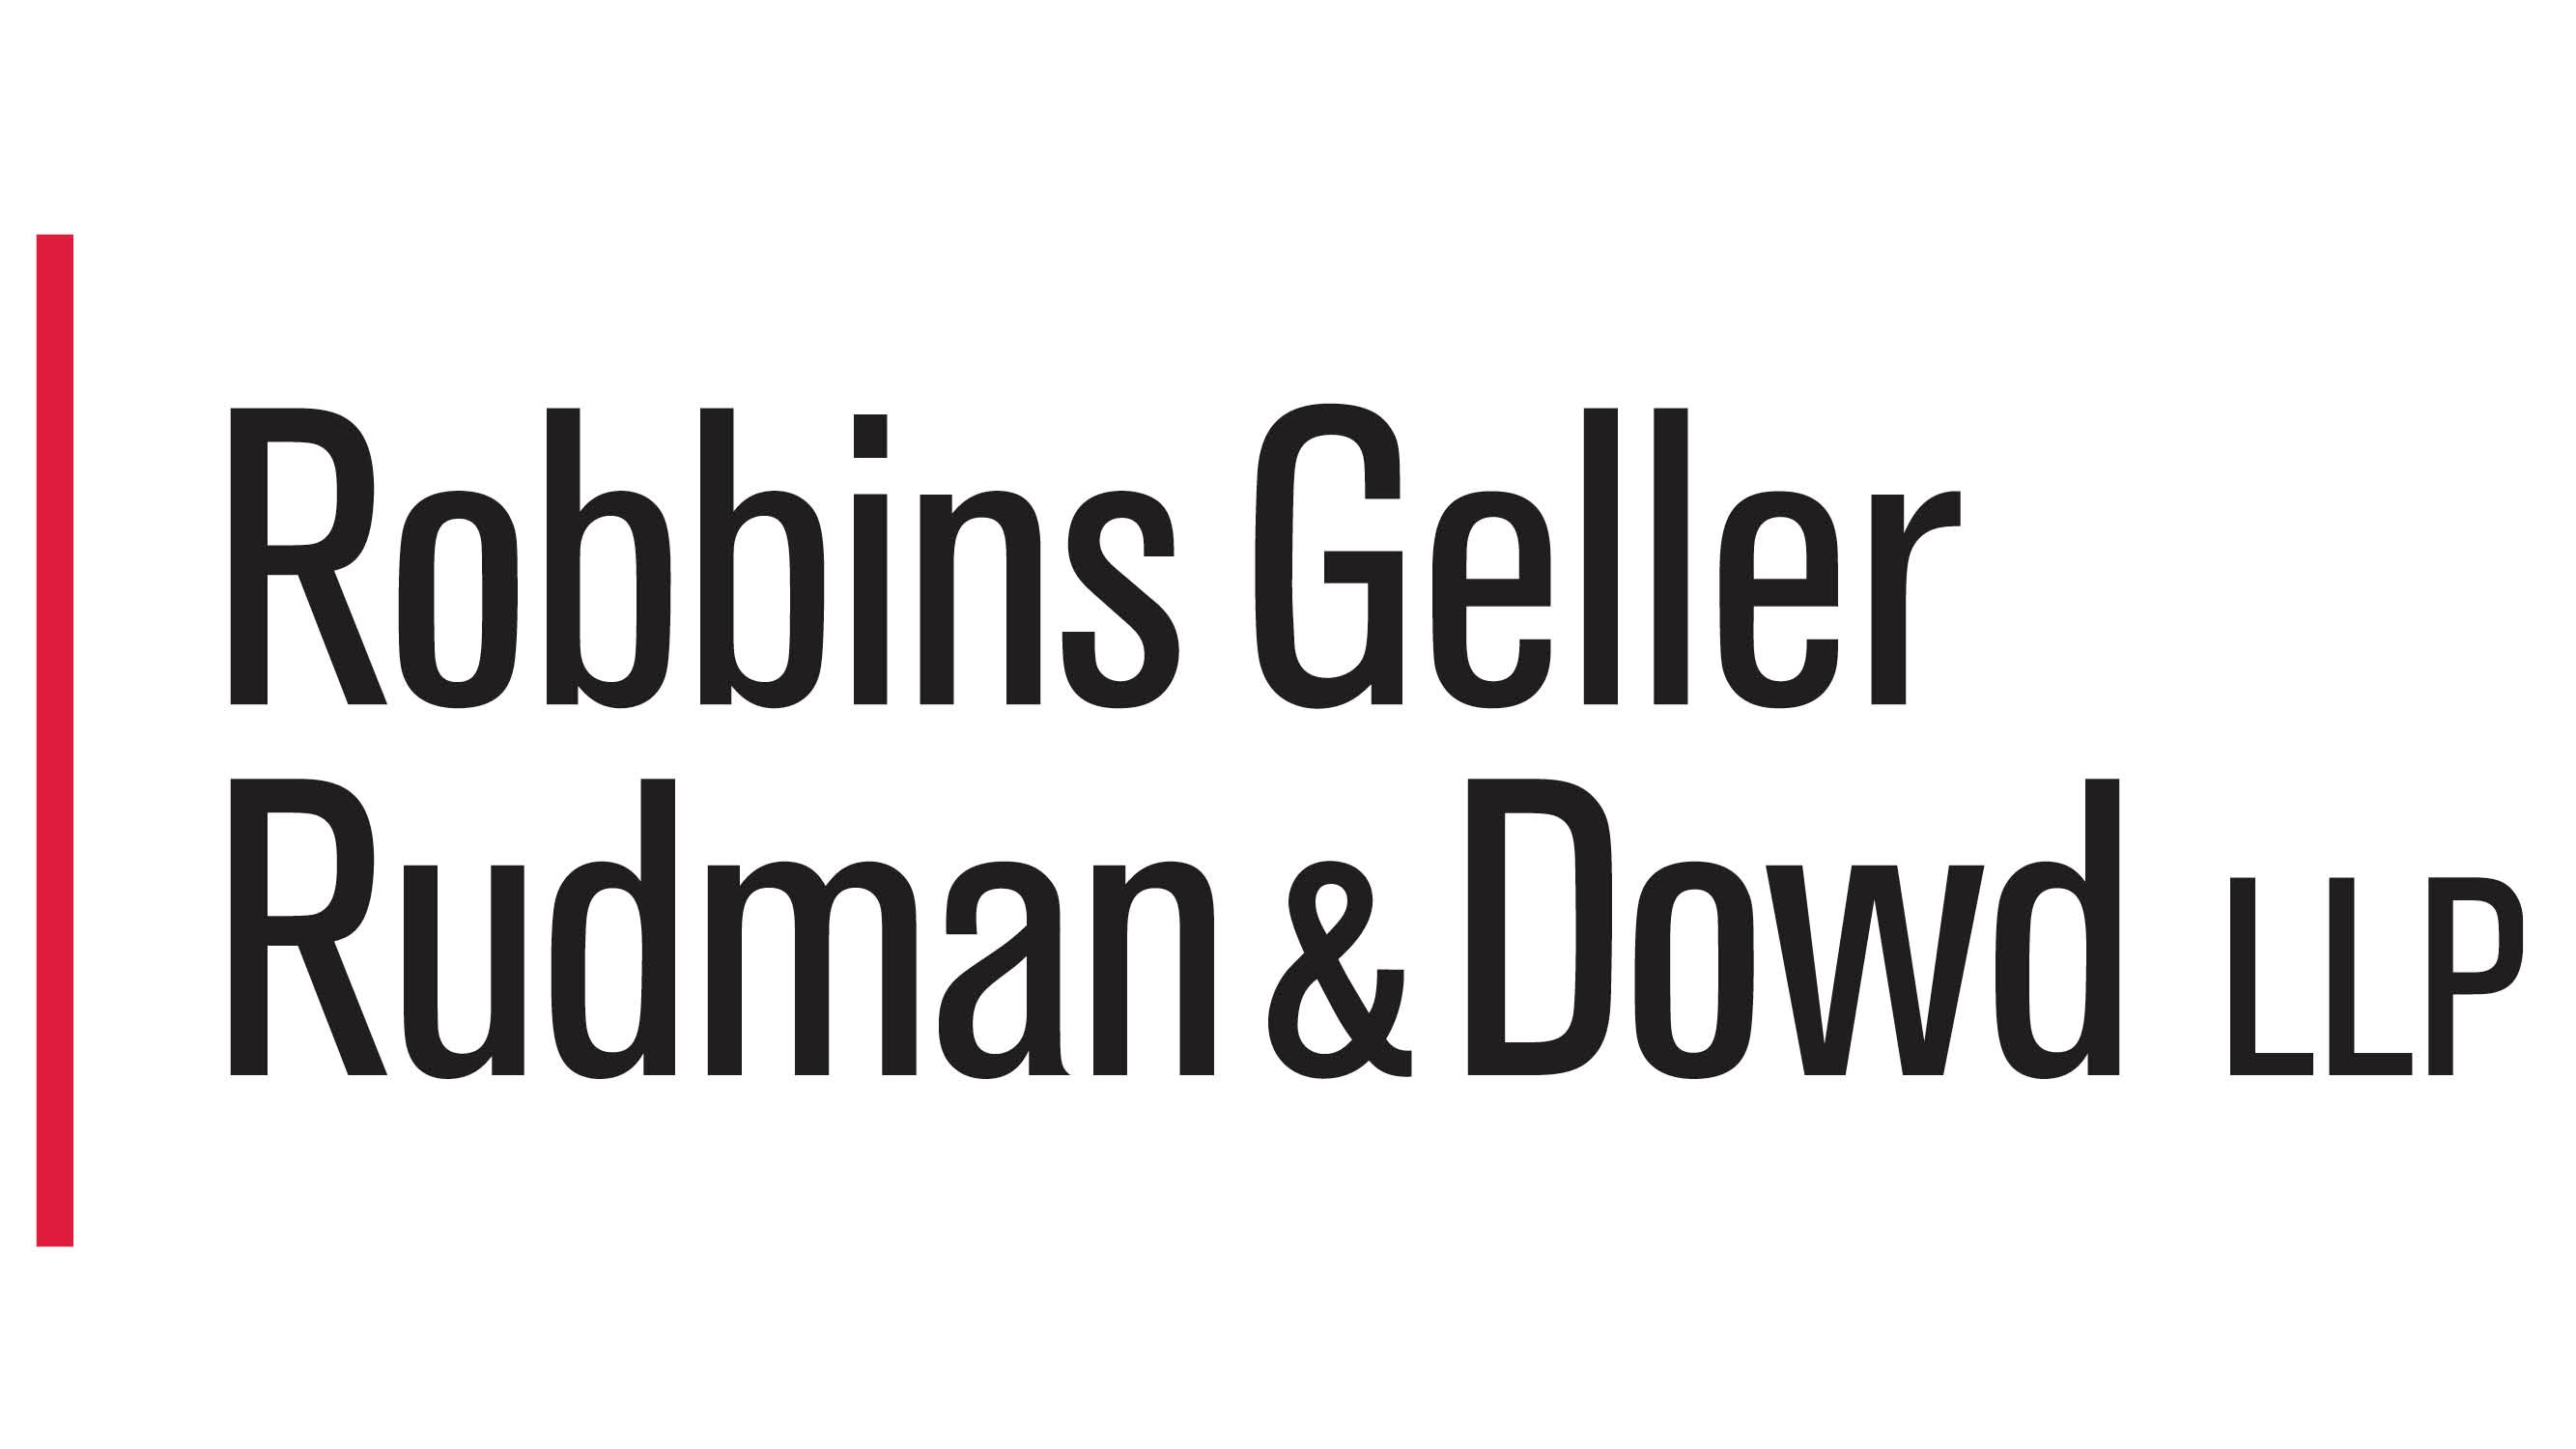 Robbins Geller Rudman & Dowd LLP, Sunday, September 19, 2021, Press release picture